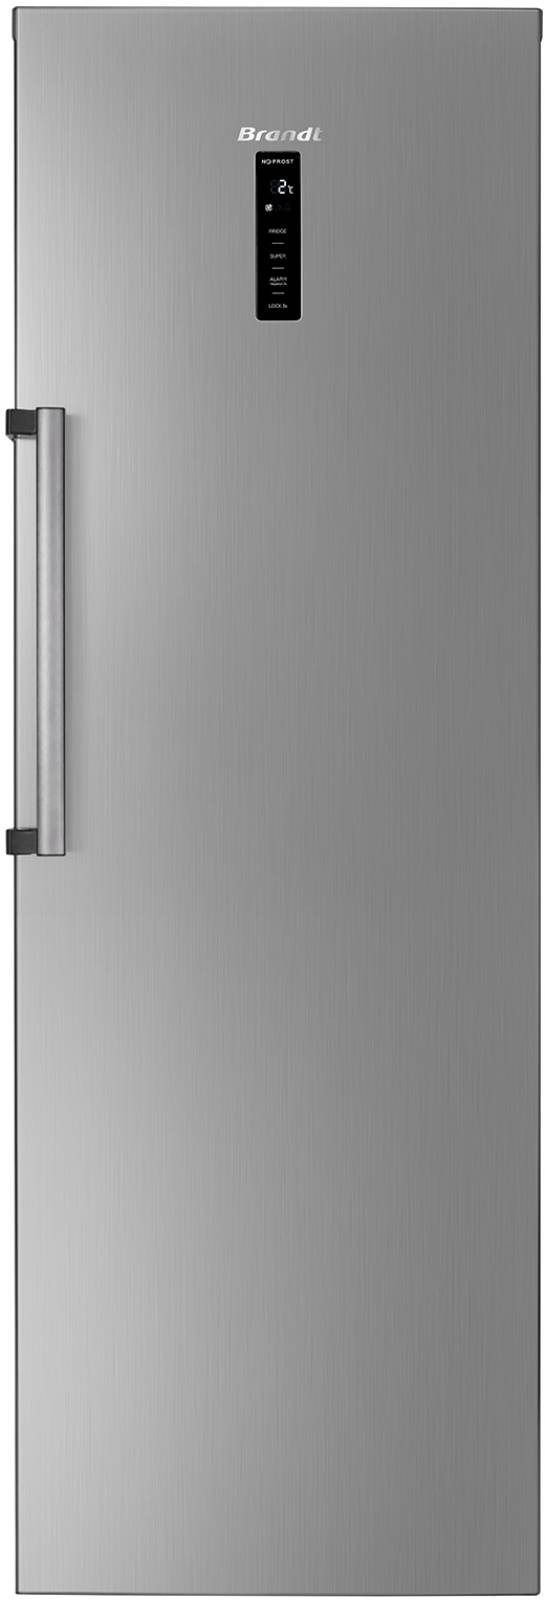 BRANDT Réfrigérateur 1 porte 359 litres Inox - BFL8620NX